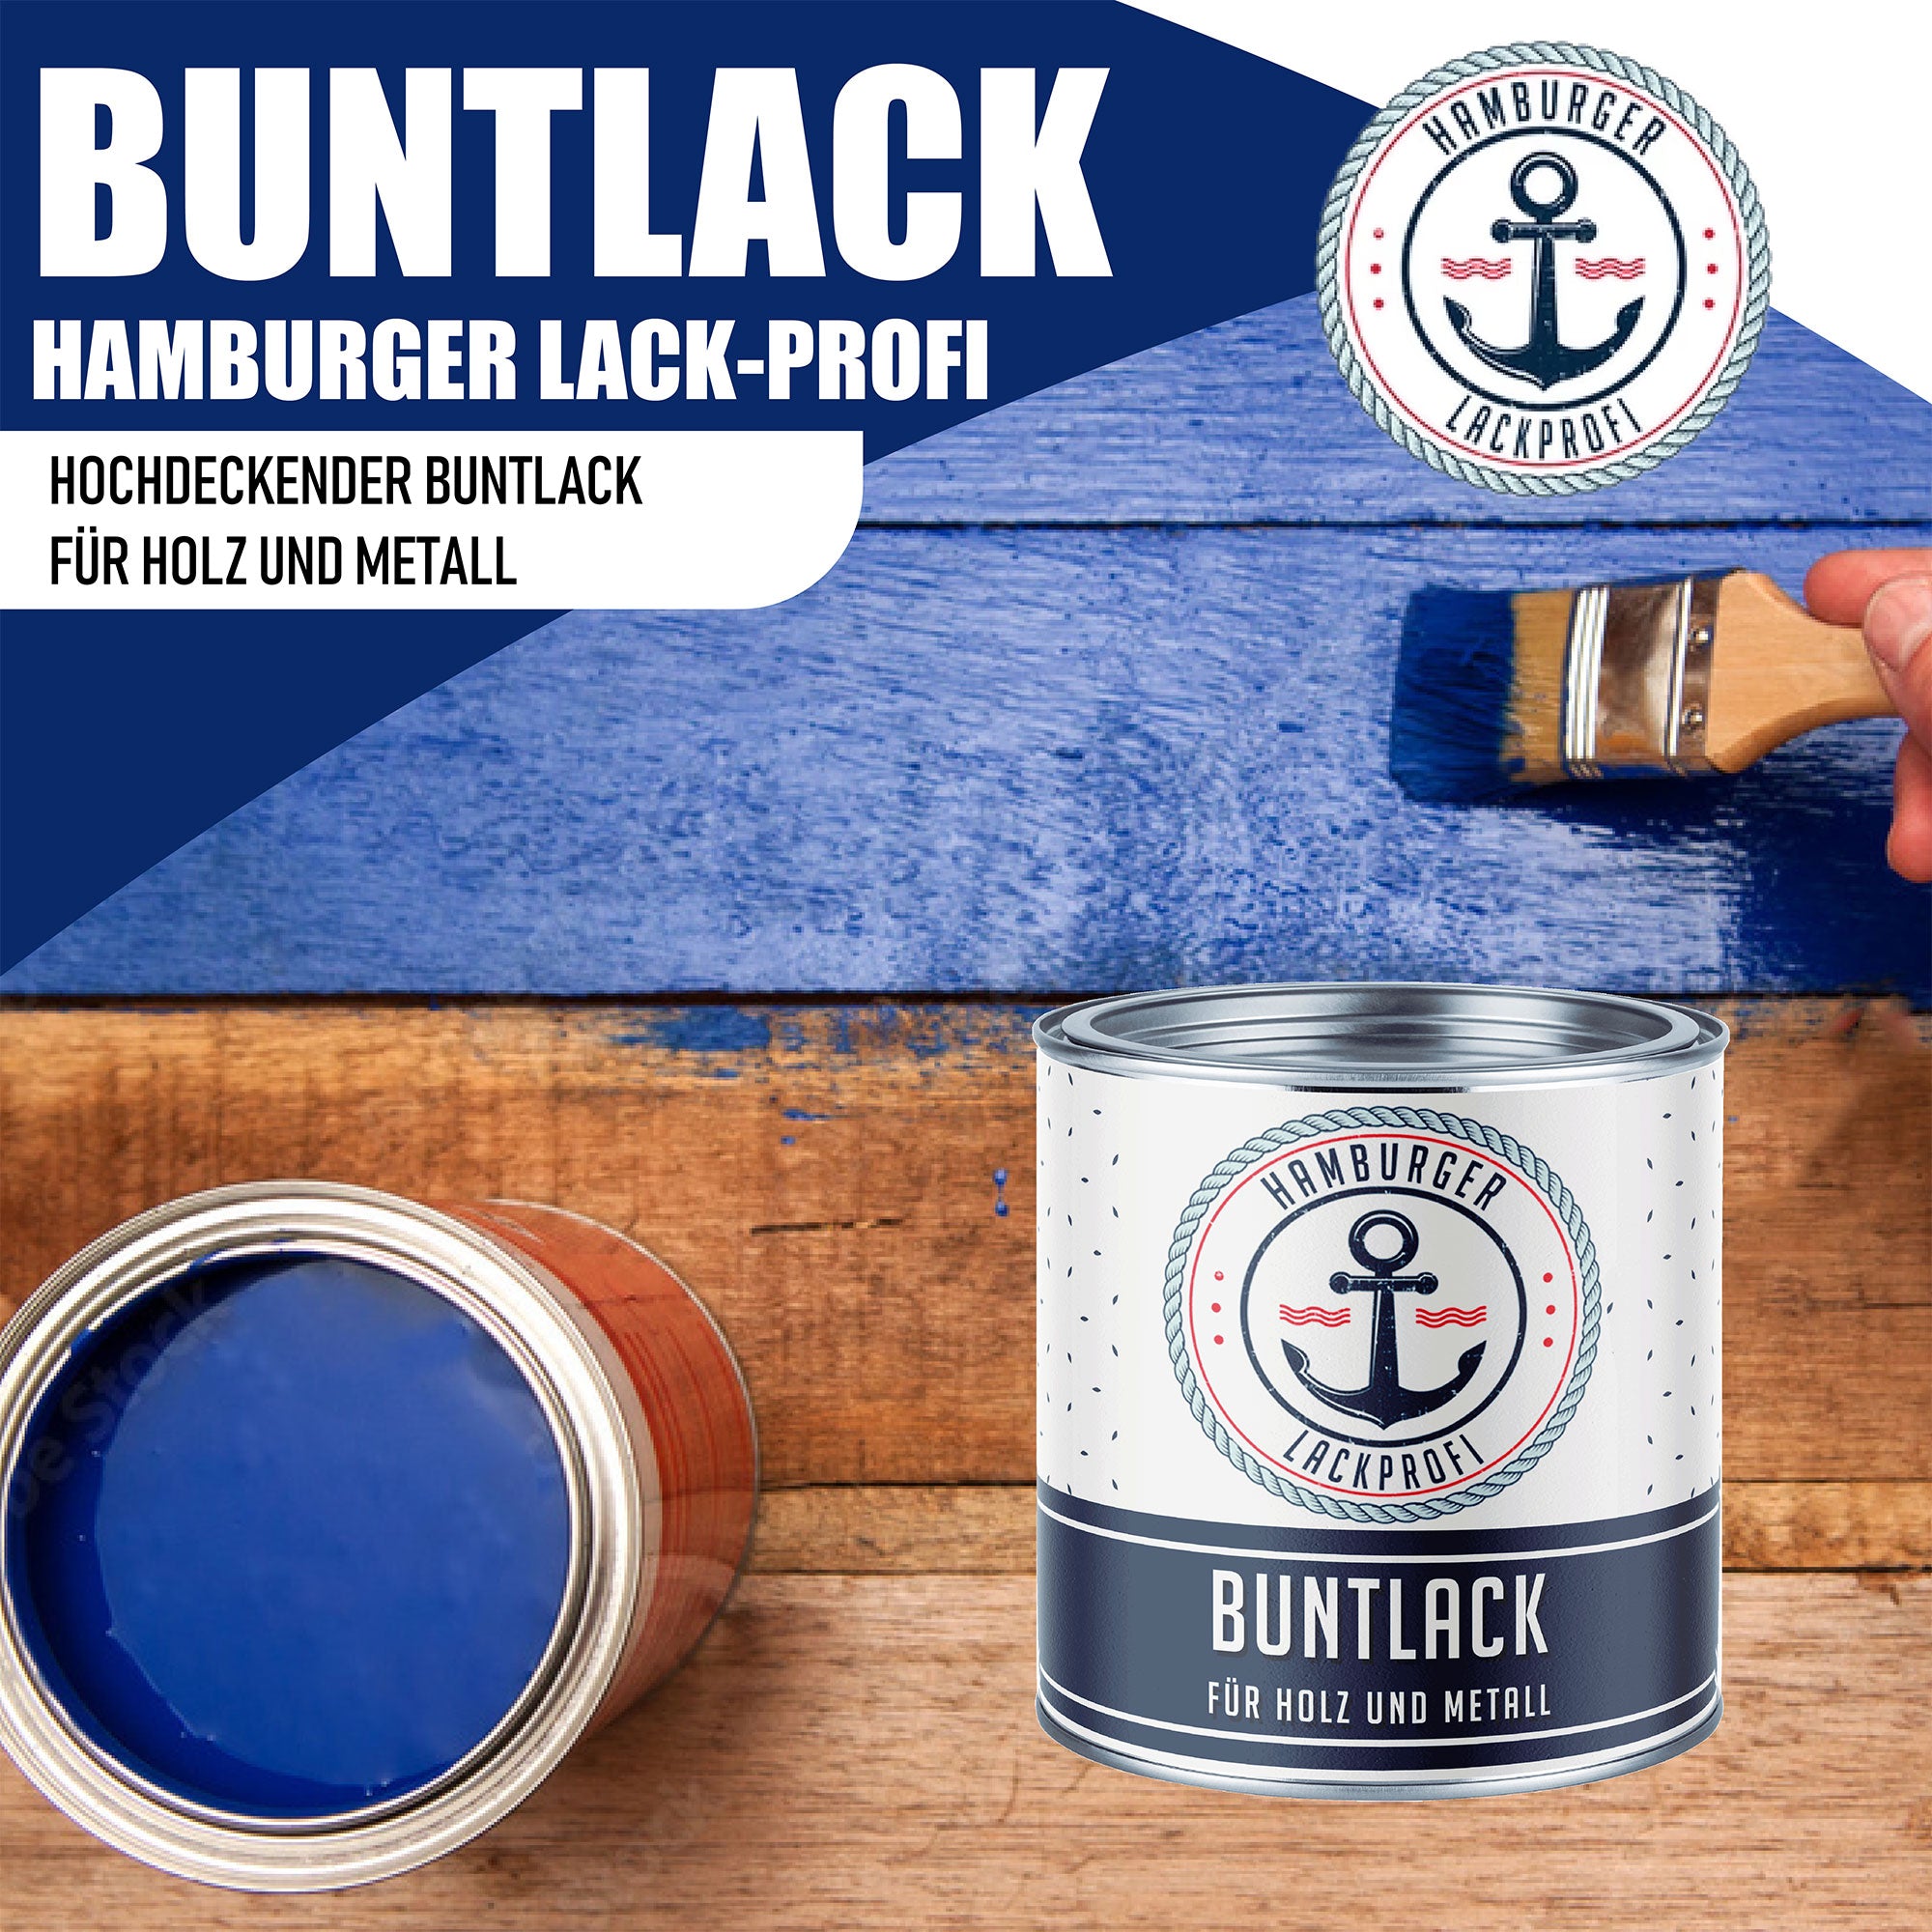 Hamburger Lack-Profi Buntlack in Grauoliv RAL 6006 mit Lackierset (X300) & Verdünnung (1 L) - 30% Sparangebot